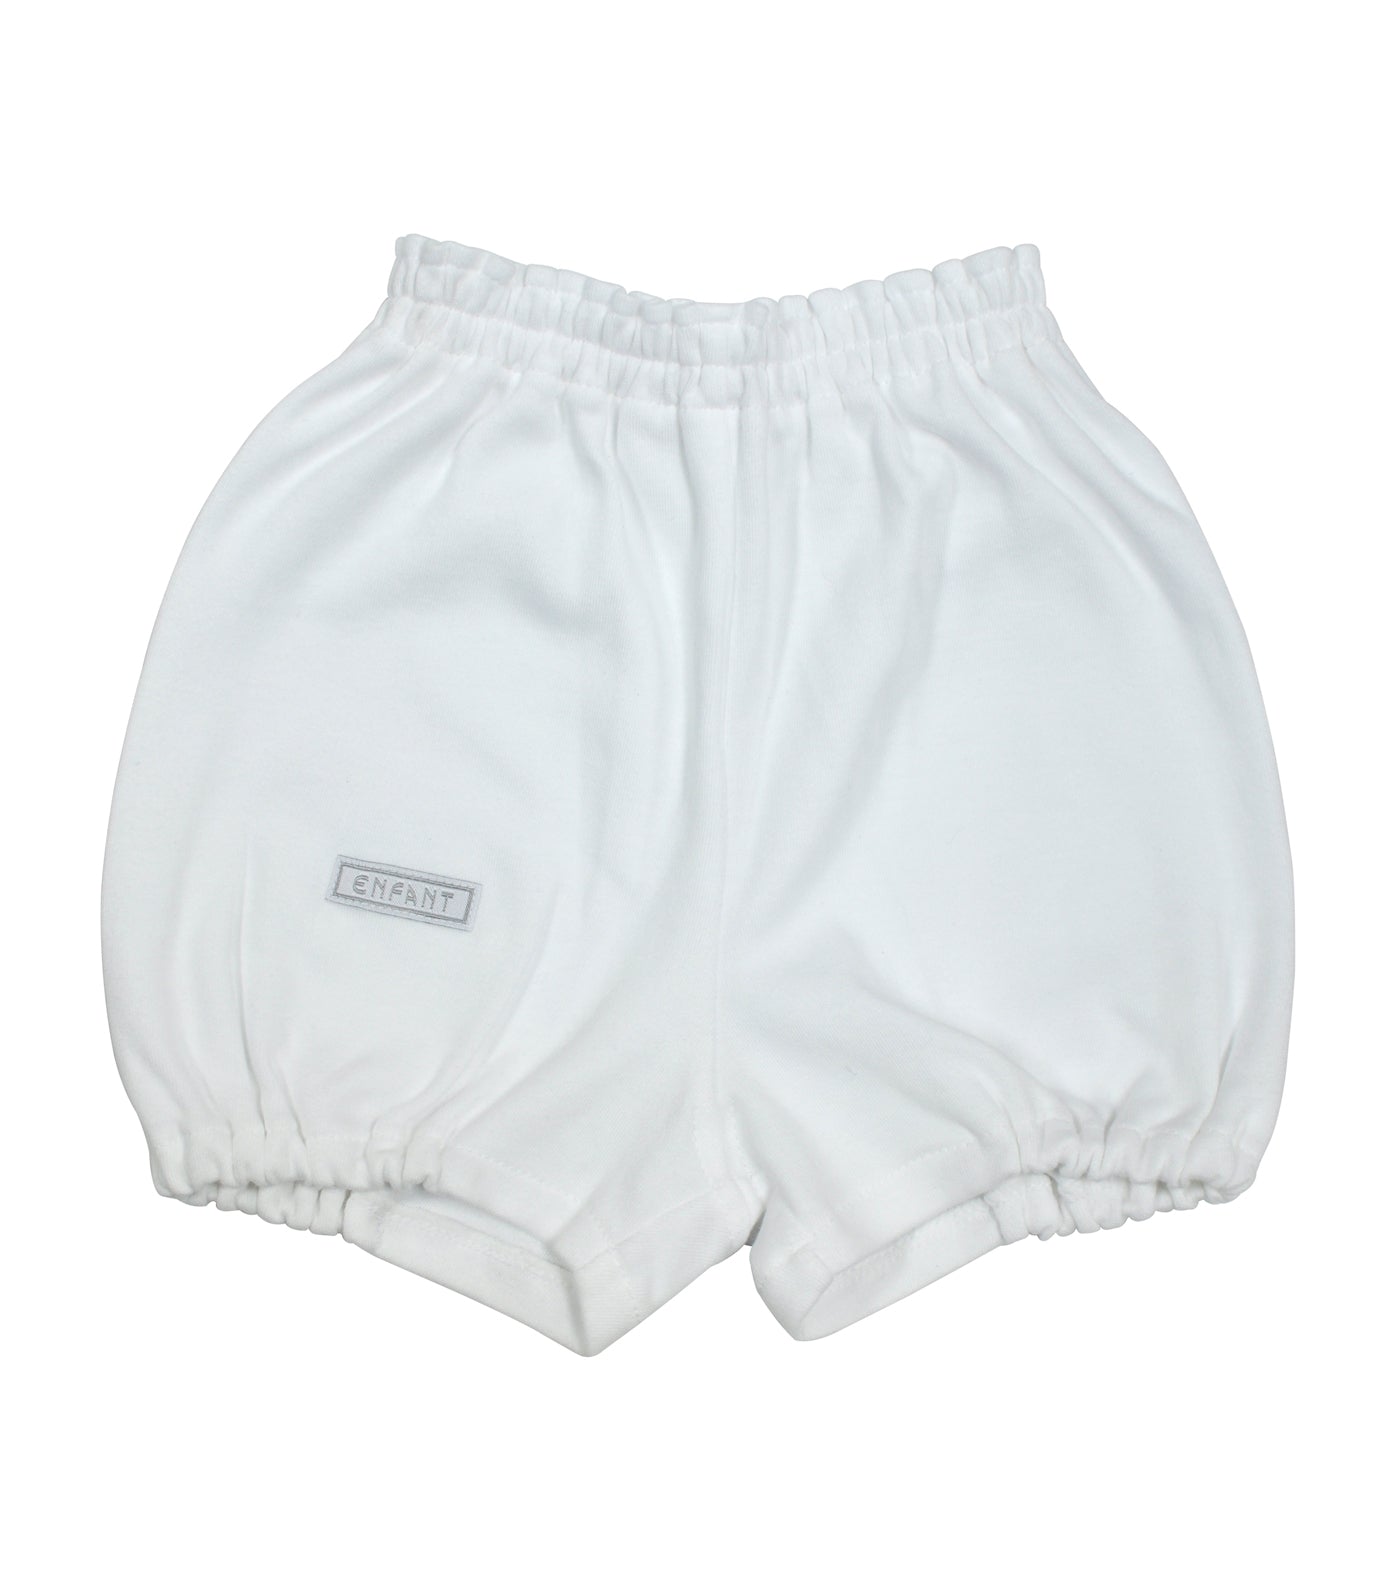 Basic Shorts